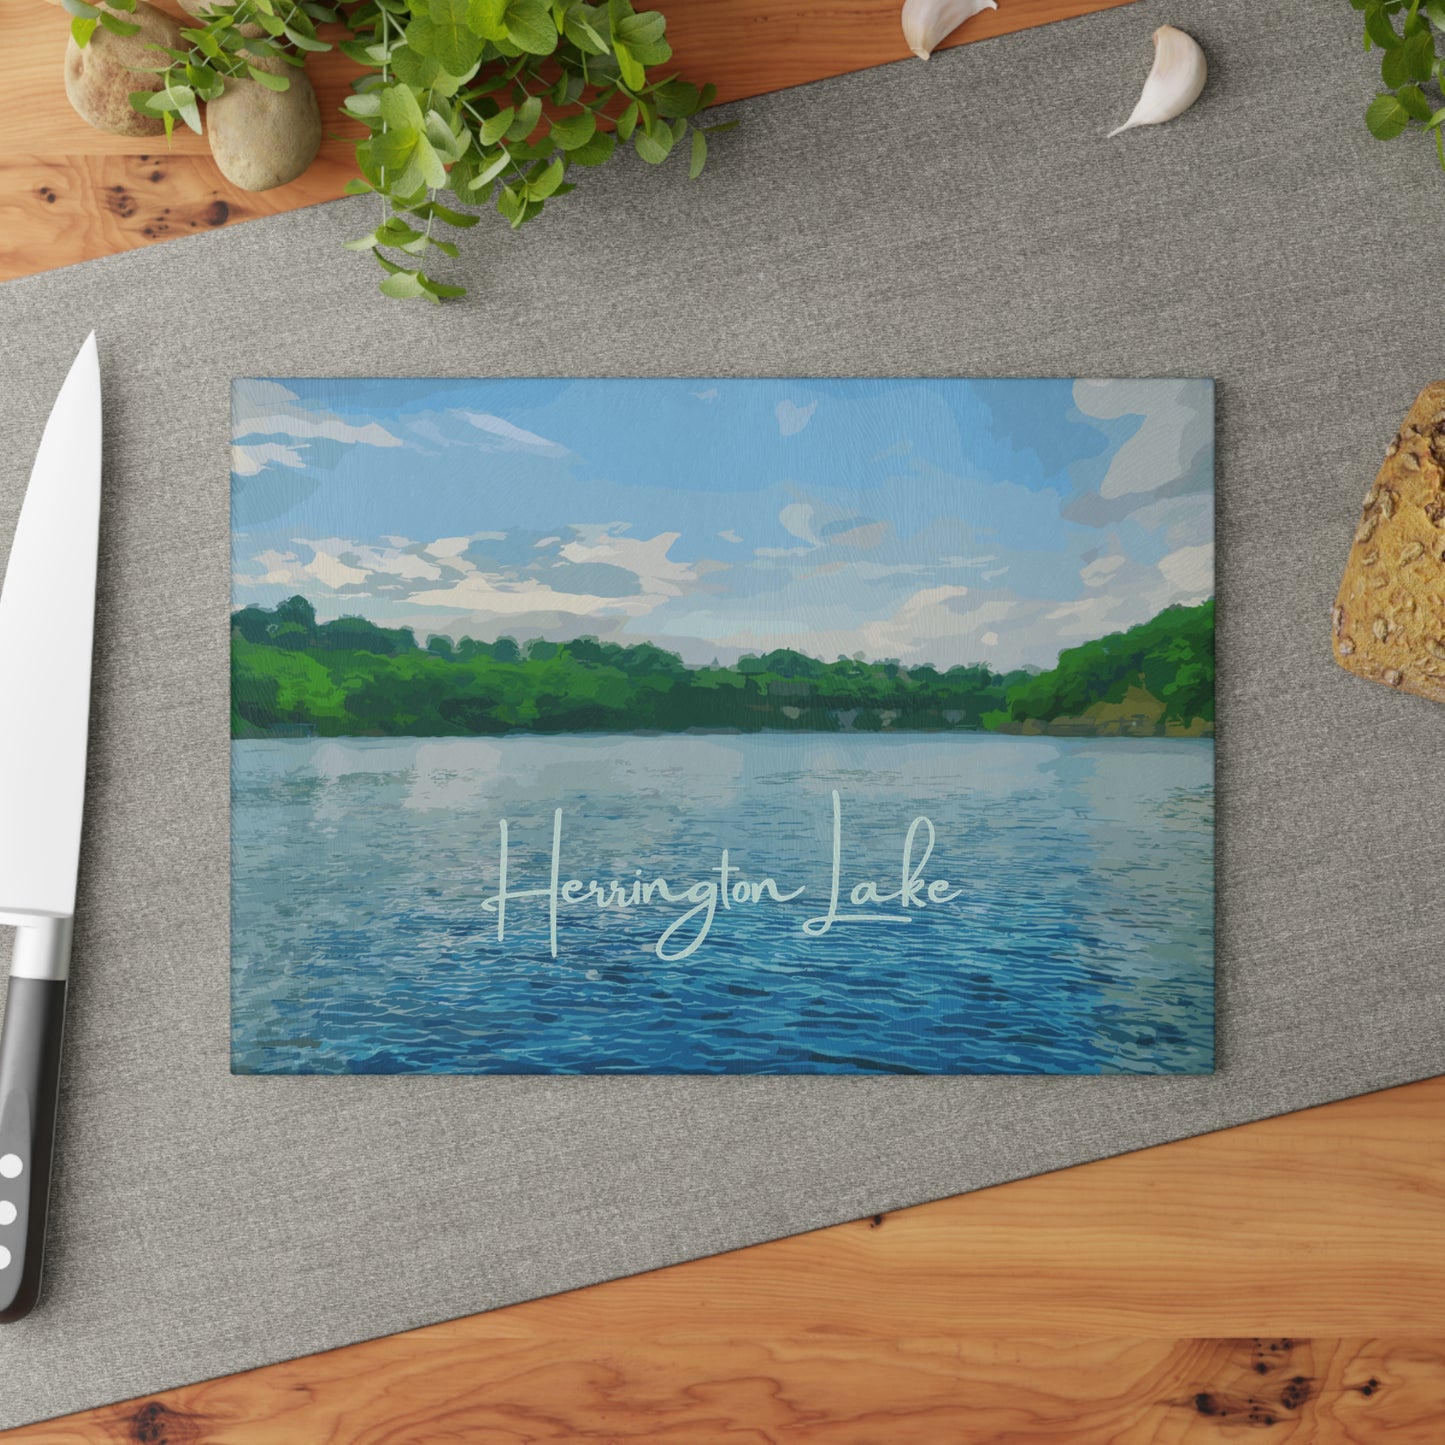 "Herrington LakeScape -1" Glass Cutting Board - White